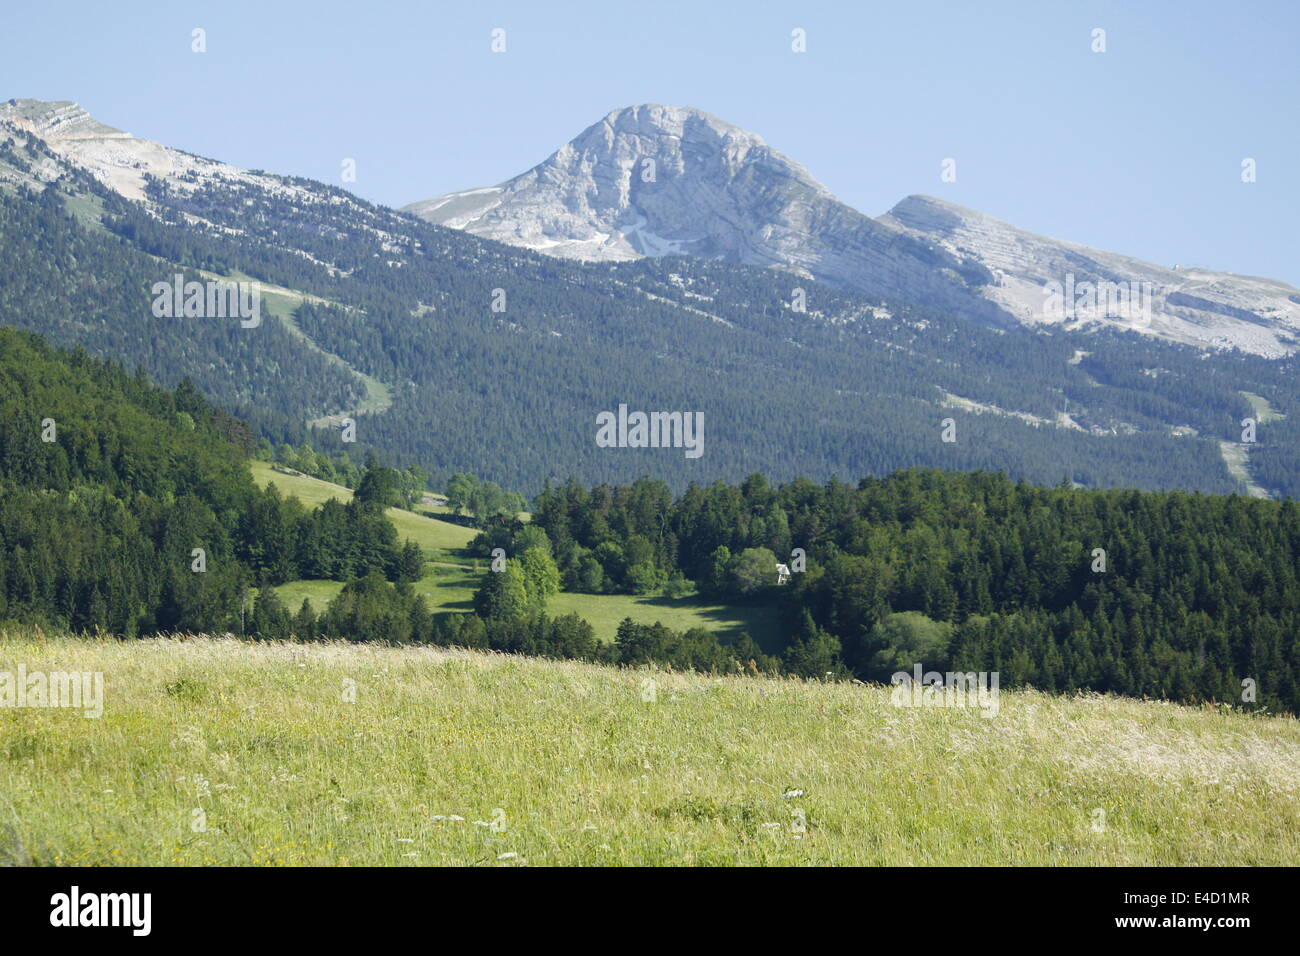 Mountain, Villard de Lans, Vercors, Isère, Rhône-Alpes, France. Stock Photo